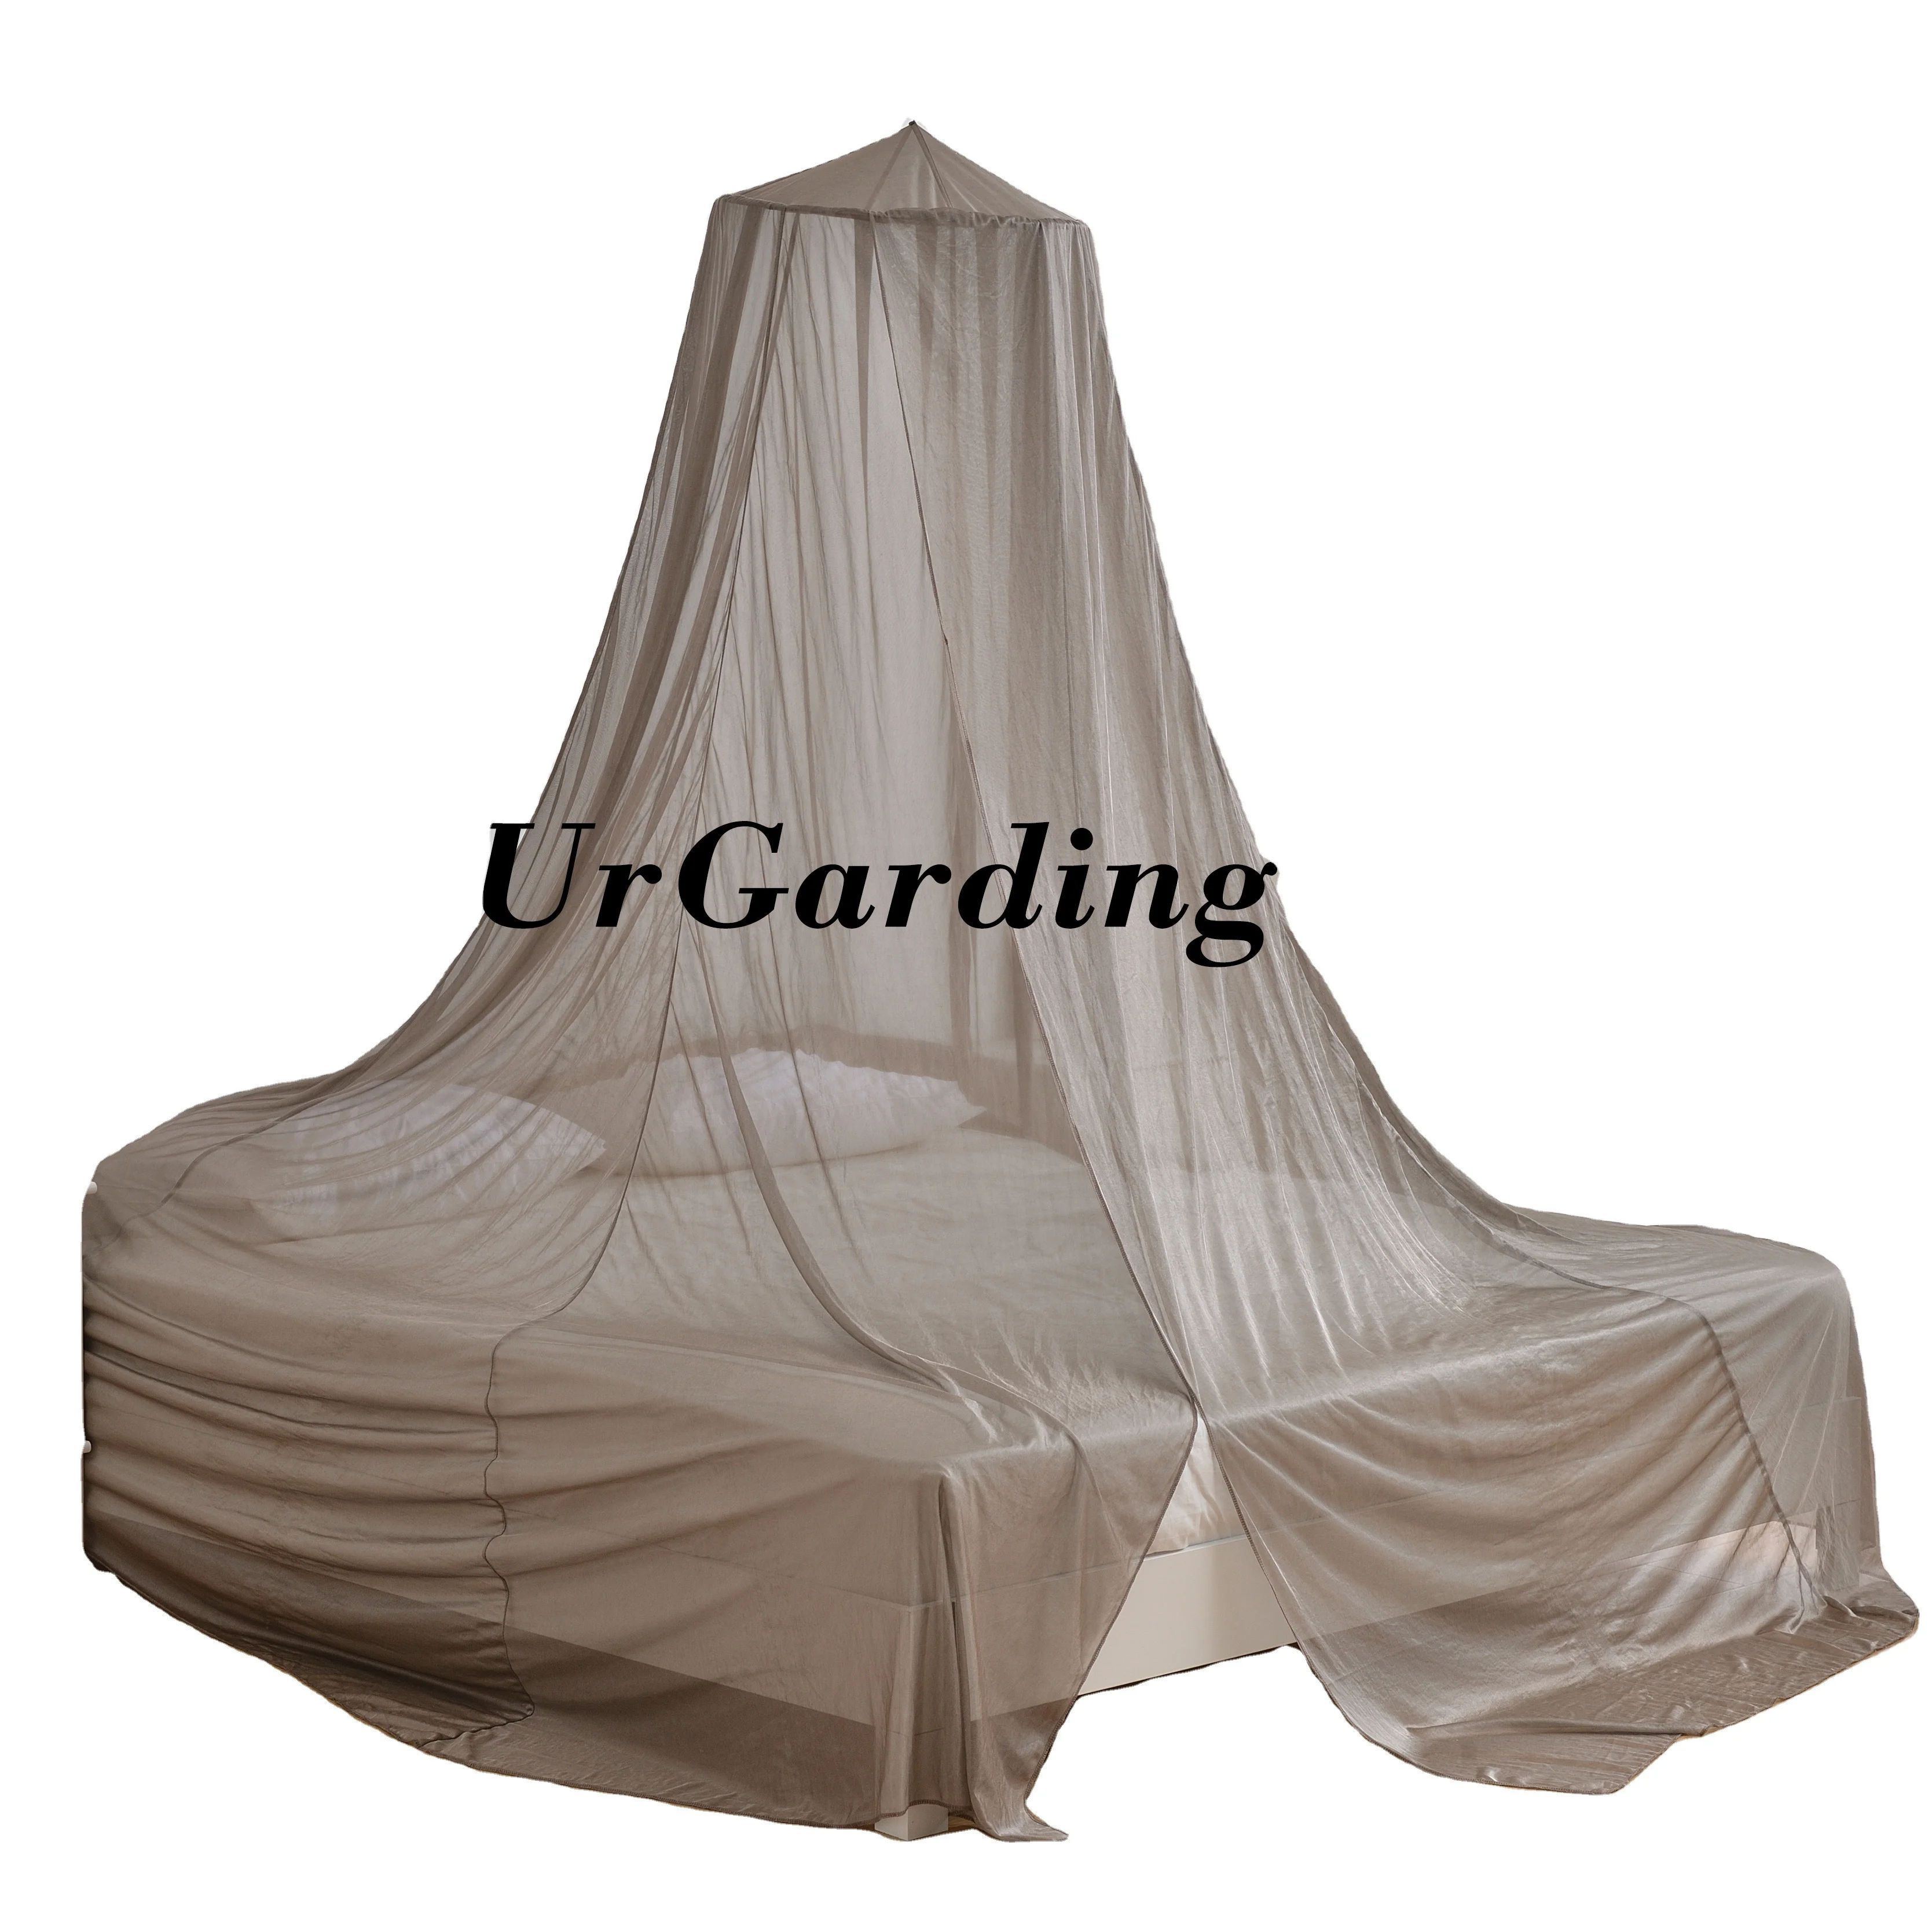 

Best Emf Shielding Canopy Emf Blocking Sleep Canopy EMF Blocker Protection Bed Queen Size Circular Dome Shape